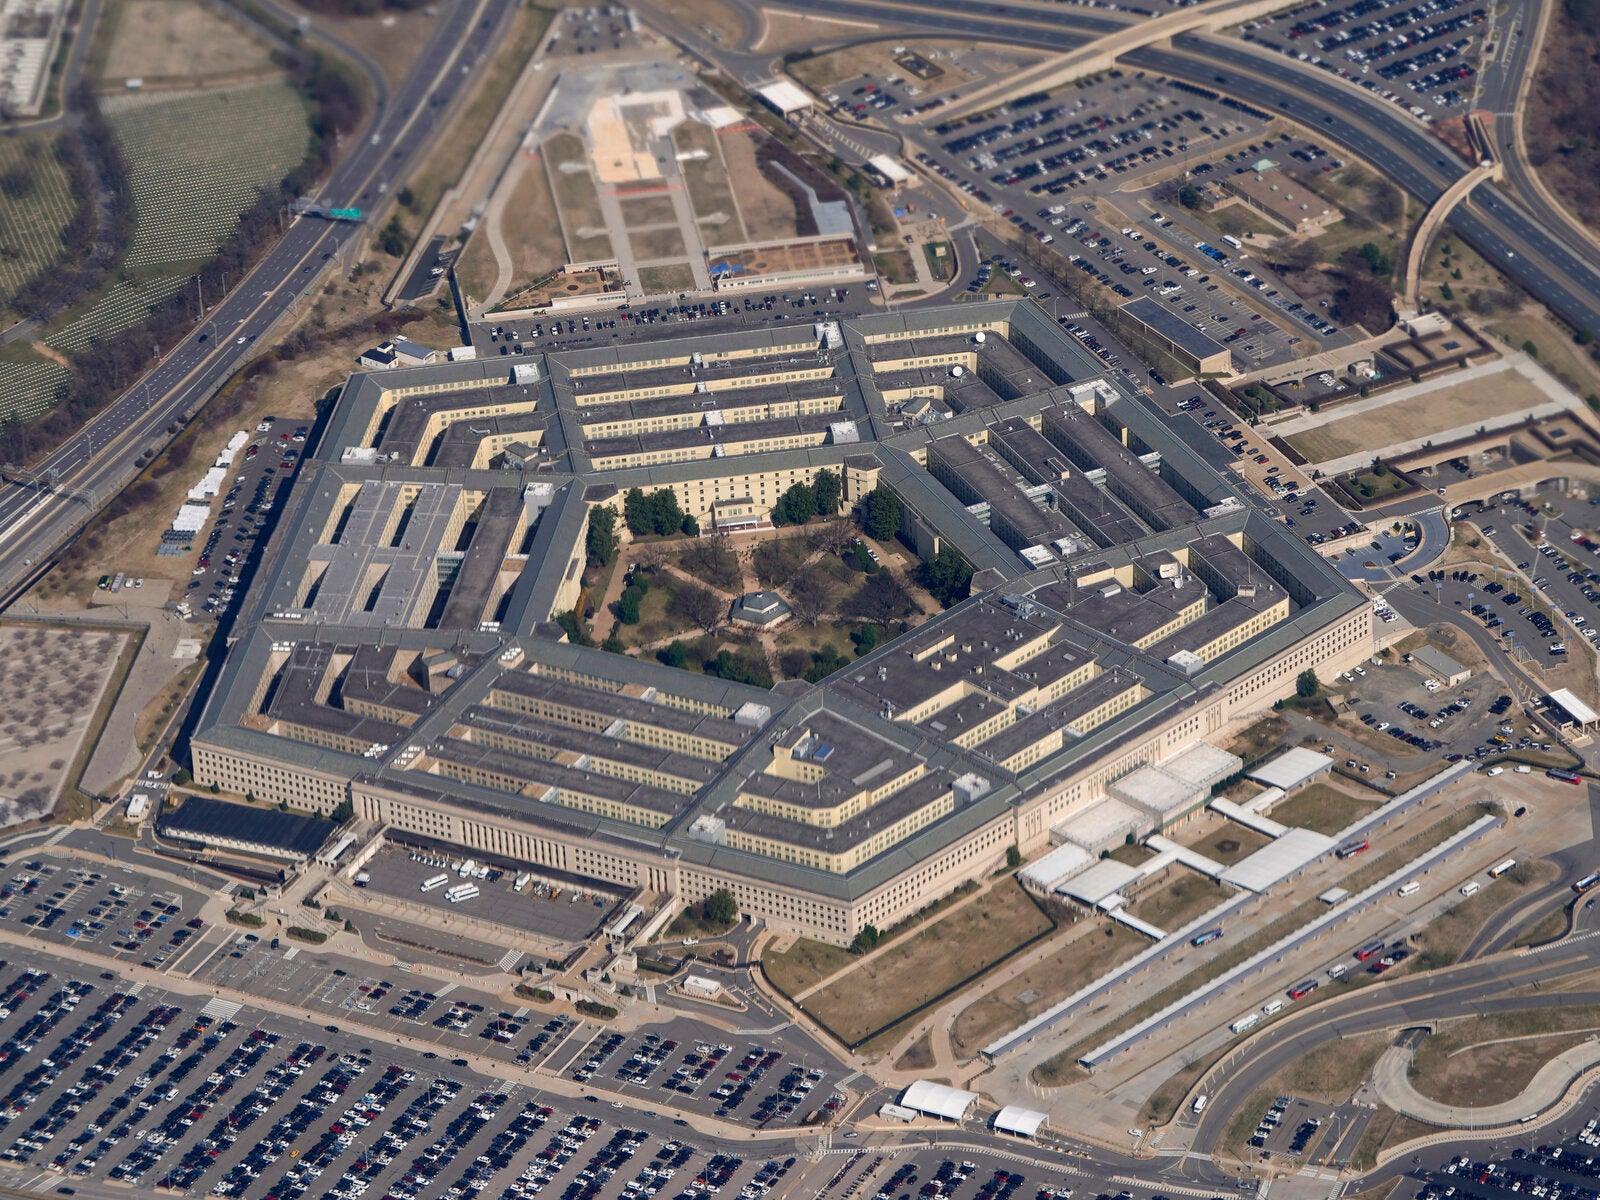 Pentagon leaks: how Jack Teixeira was identified as the alleged source, Pentagon leaks 2023